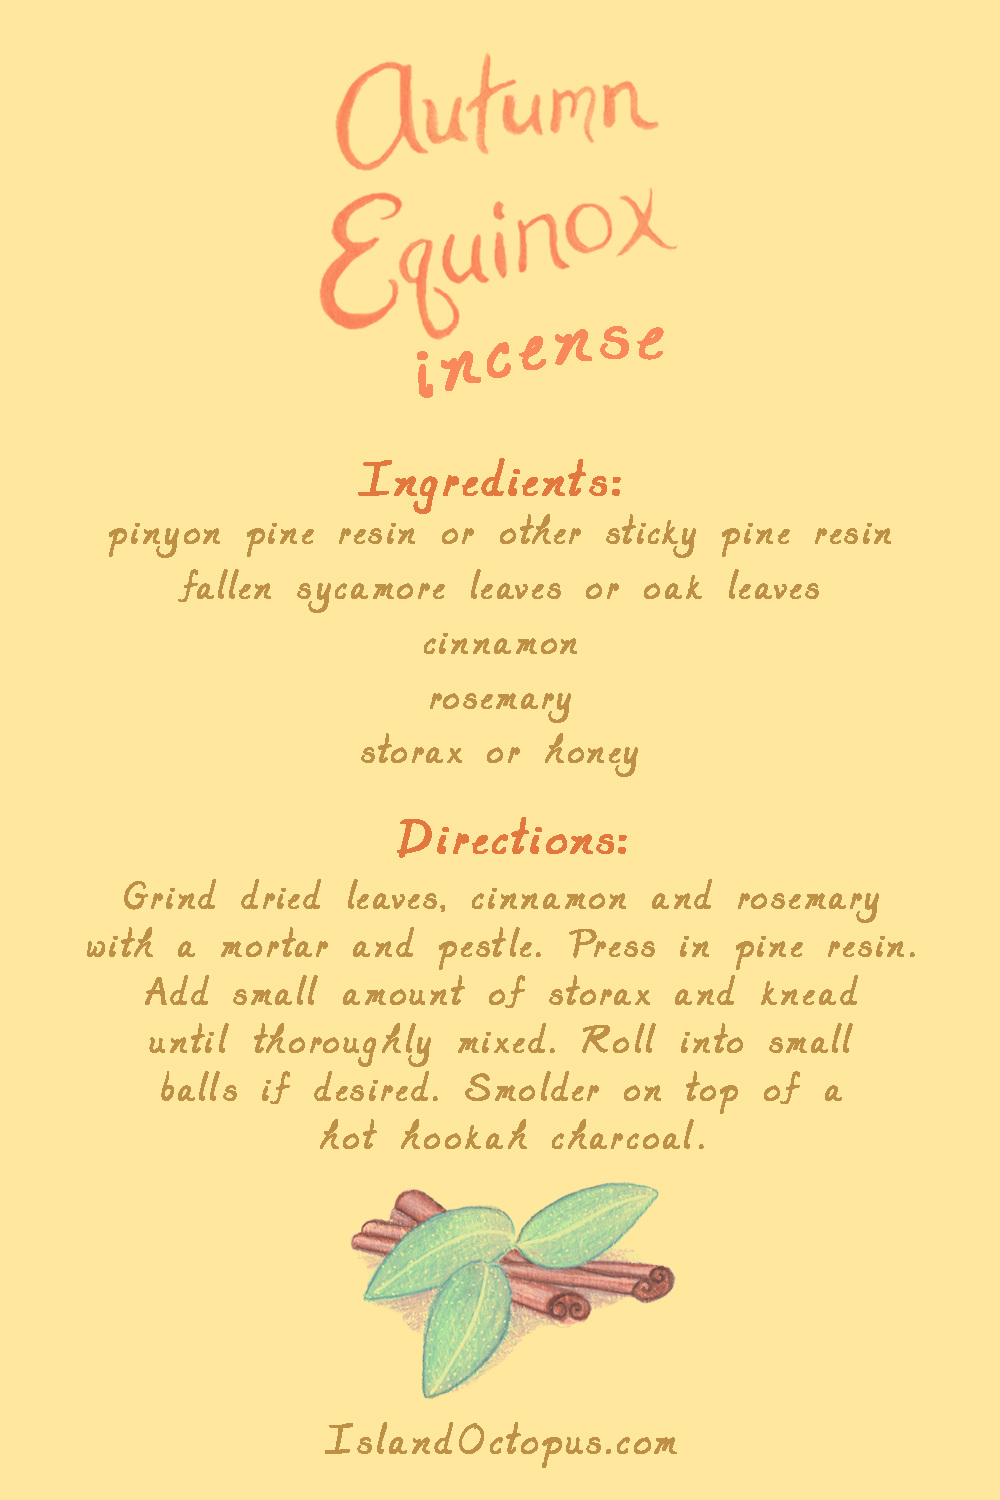 Autumn Equinox Incense recipe by IslandOctopus.com